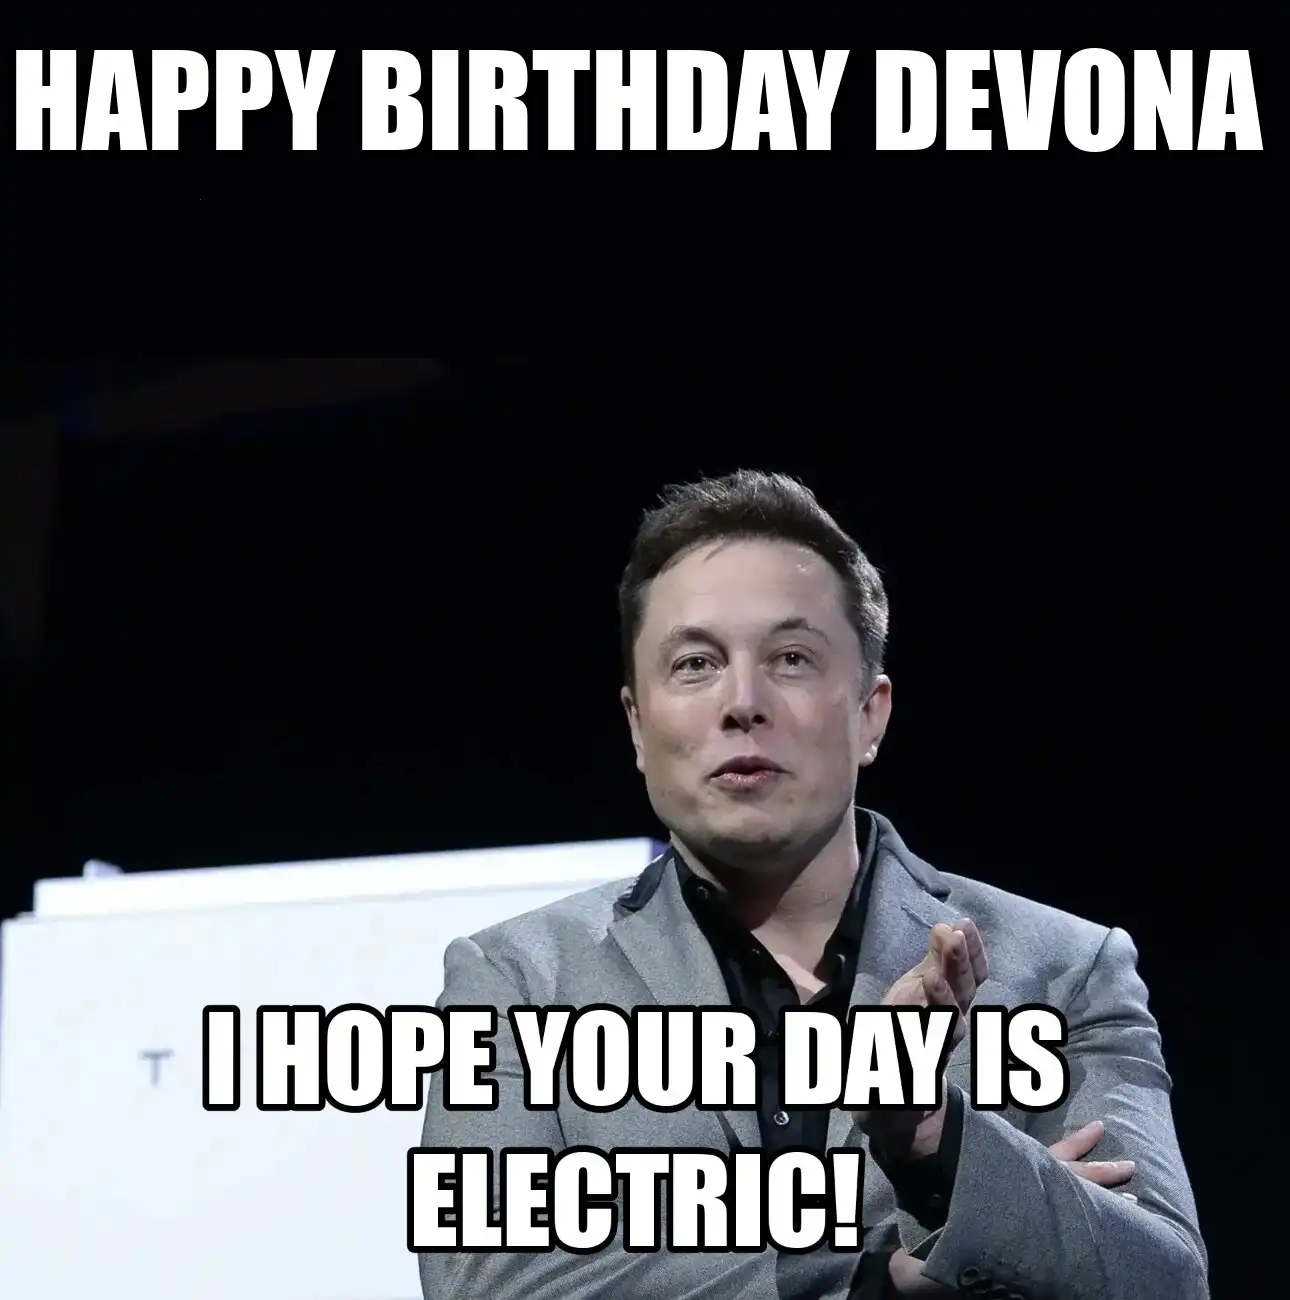 Happy Birthday Devona I Hope Your Day Is Electric Meme